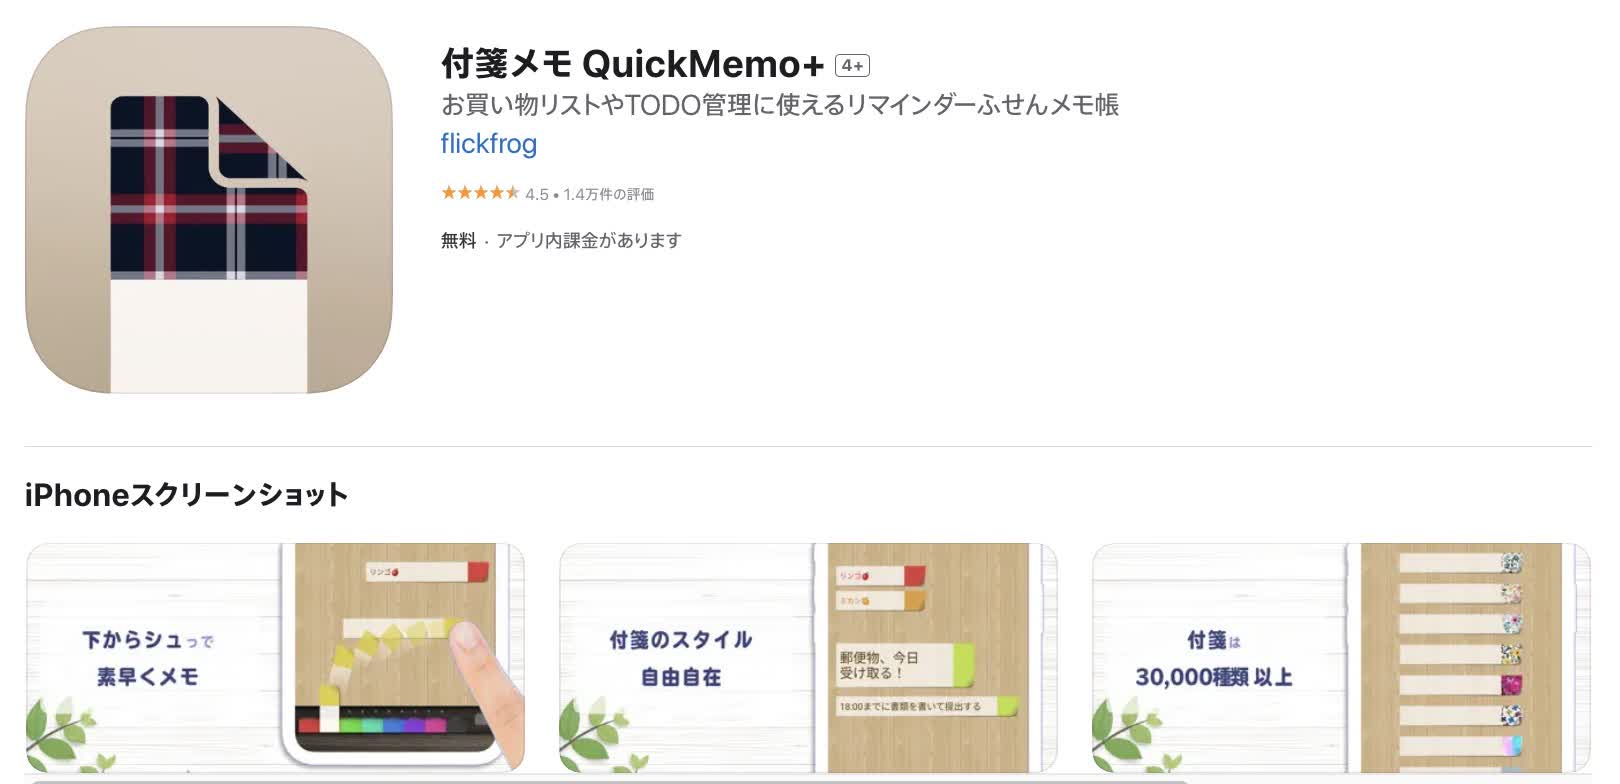 QuickMemo+